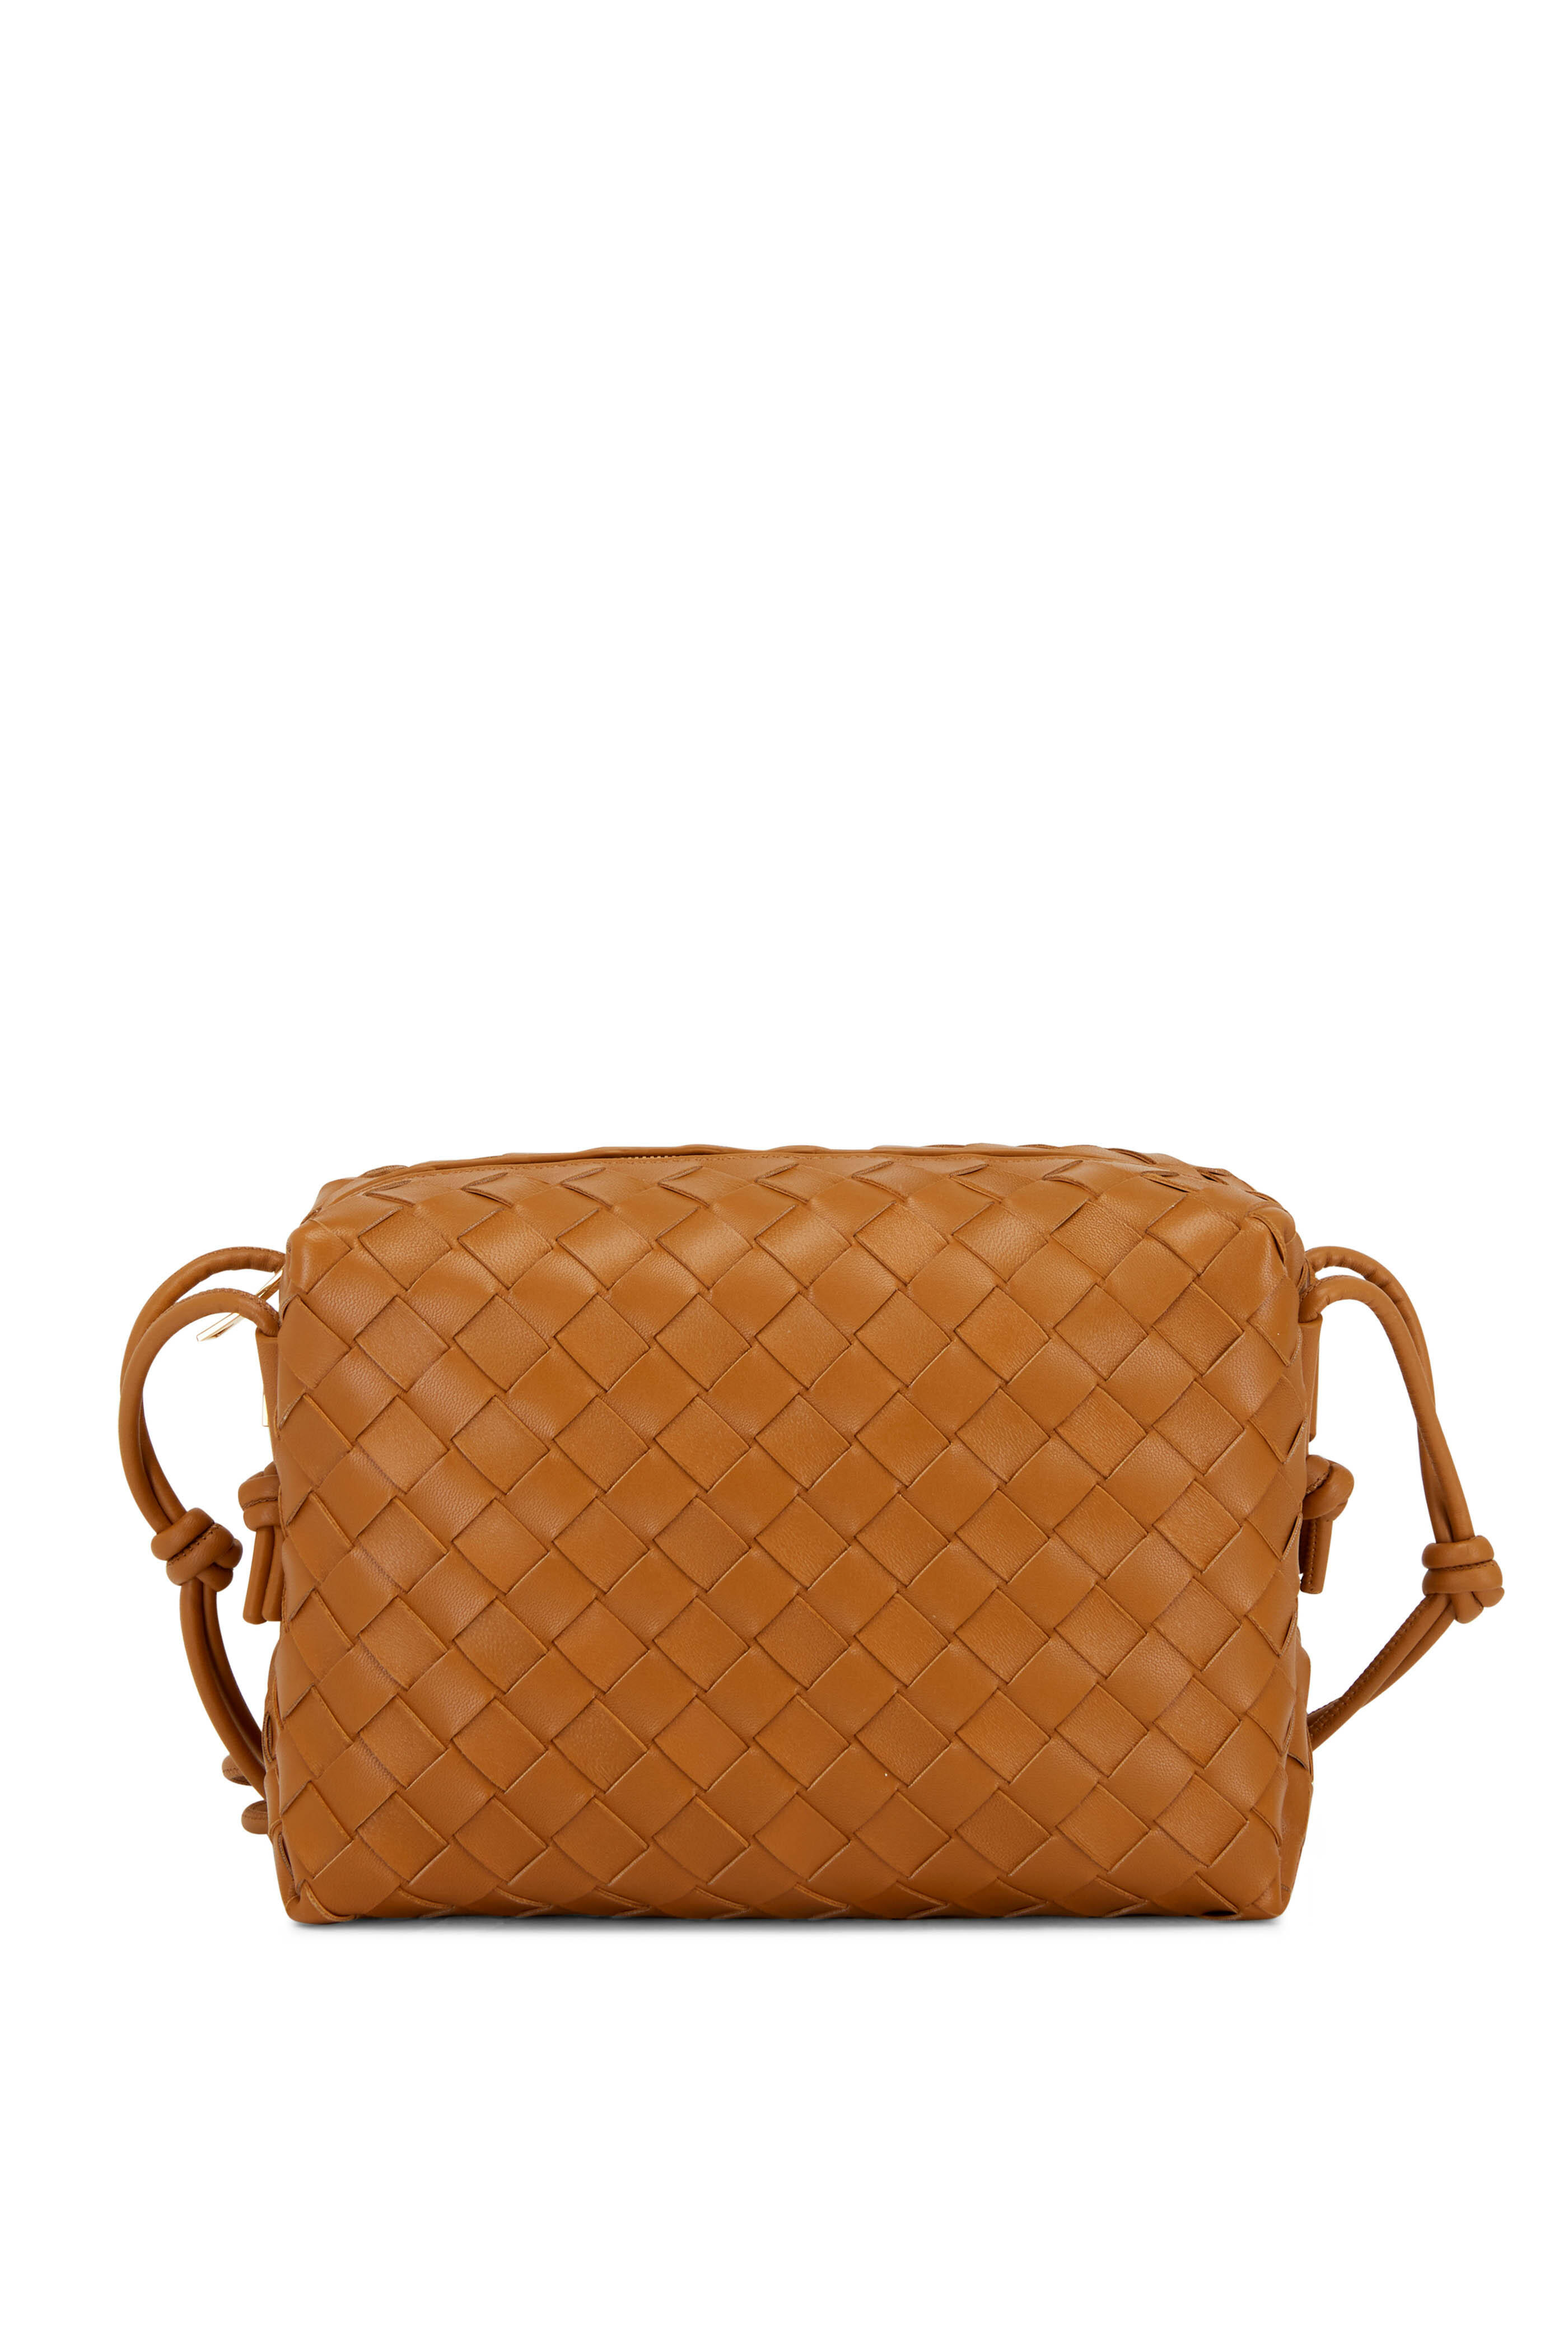 Bottega Veneta Padded Woven Clutch Bag w/ Strap, Camel, Women's, Clutches & Small Handbags Clutches Pouches & Wristlets